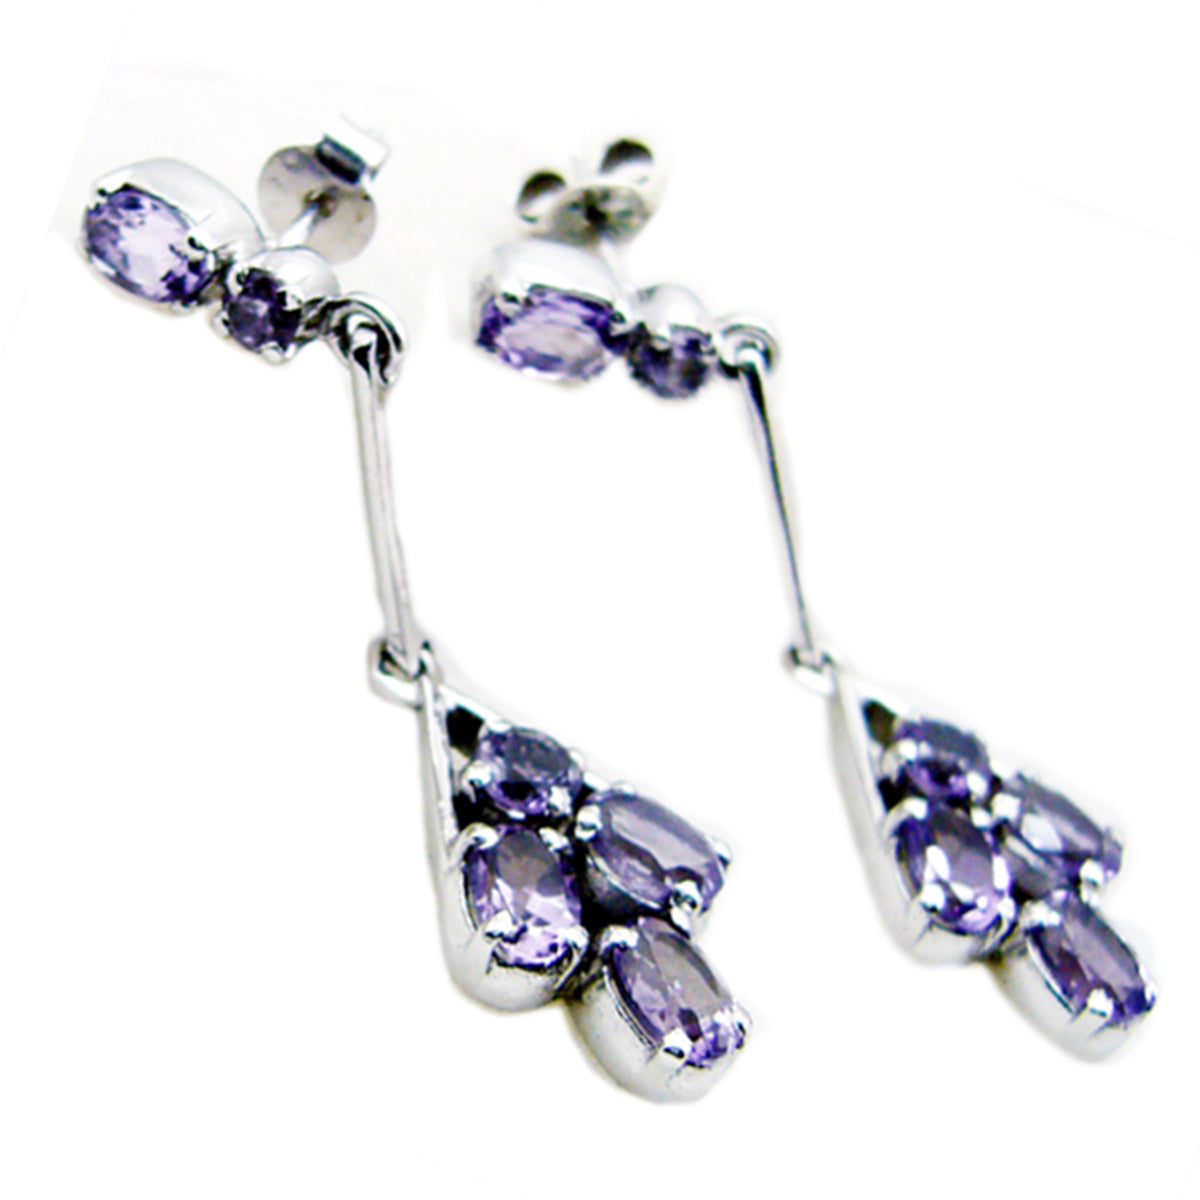 Riyo Good Gemstones multi shape Faceted Purple Amethyst Silver Earrings gift for Faishonable day